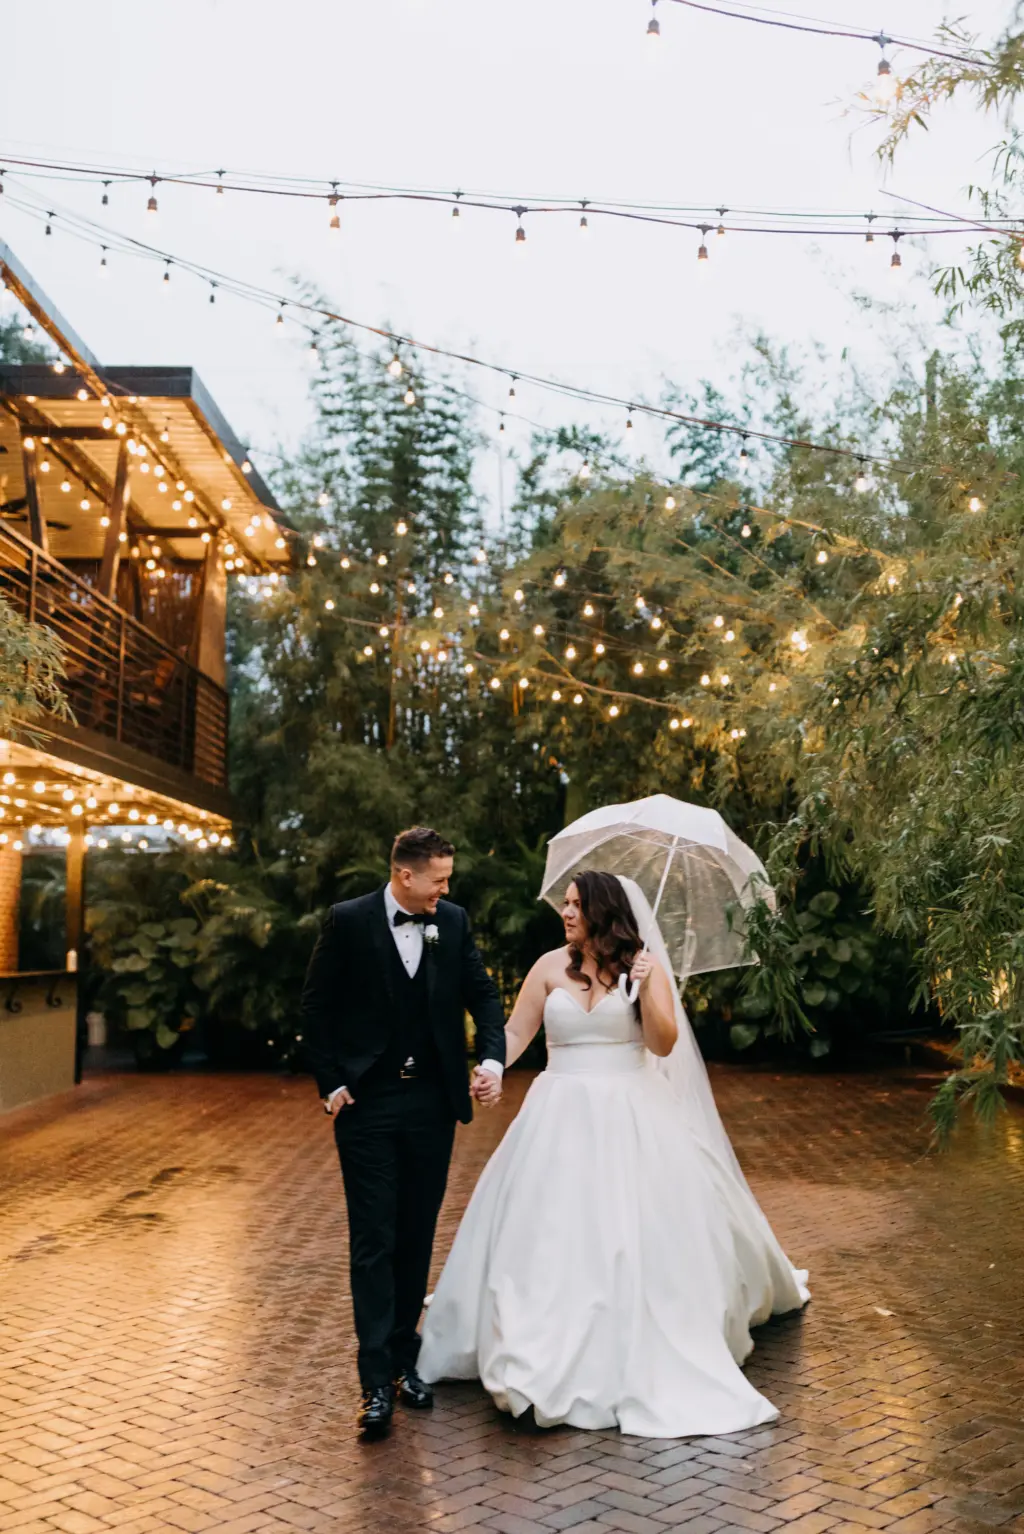 Bride and Groom Bamboo Courtyard Wedding Portrait with Umbrella | Justin Alexander Ballgown Dress | Photographer Amber McWhorter Photography | Downtown St Pete Venue NOVA 535